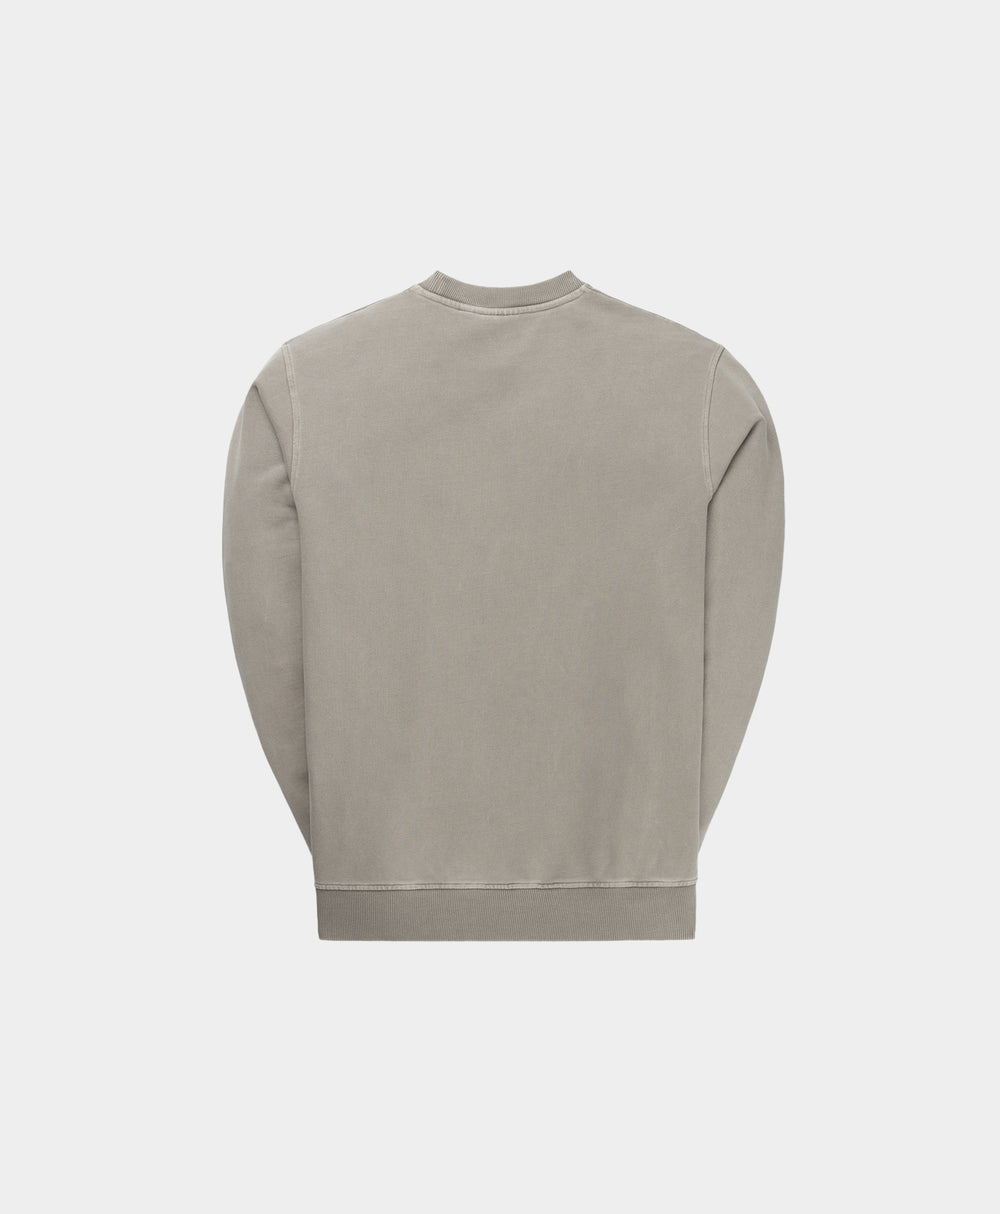 DP - Mudstone Brown Posom Sweater - Packshot - Rear